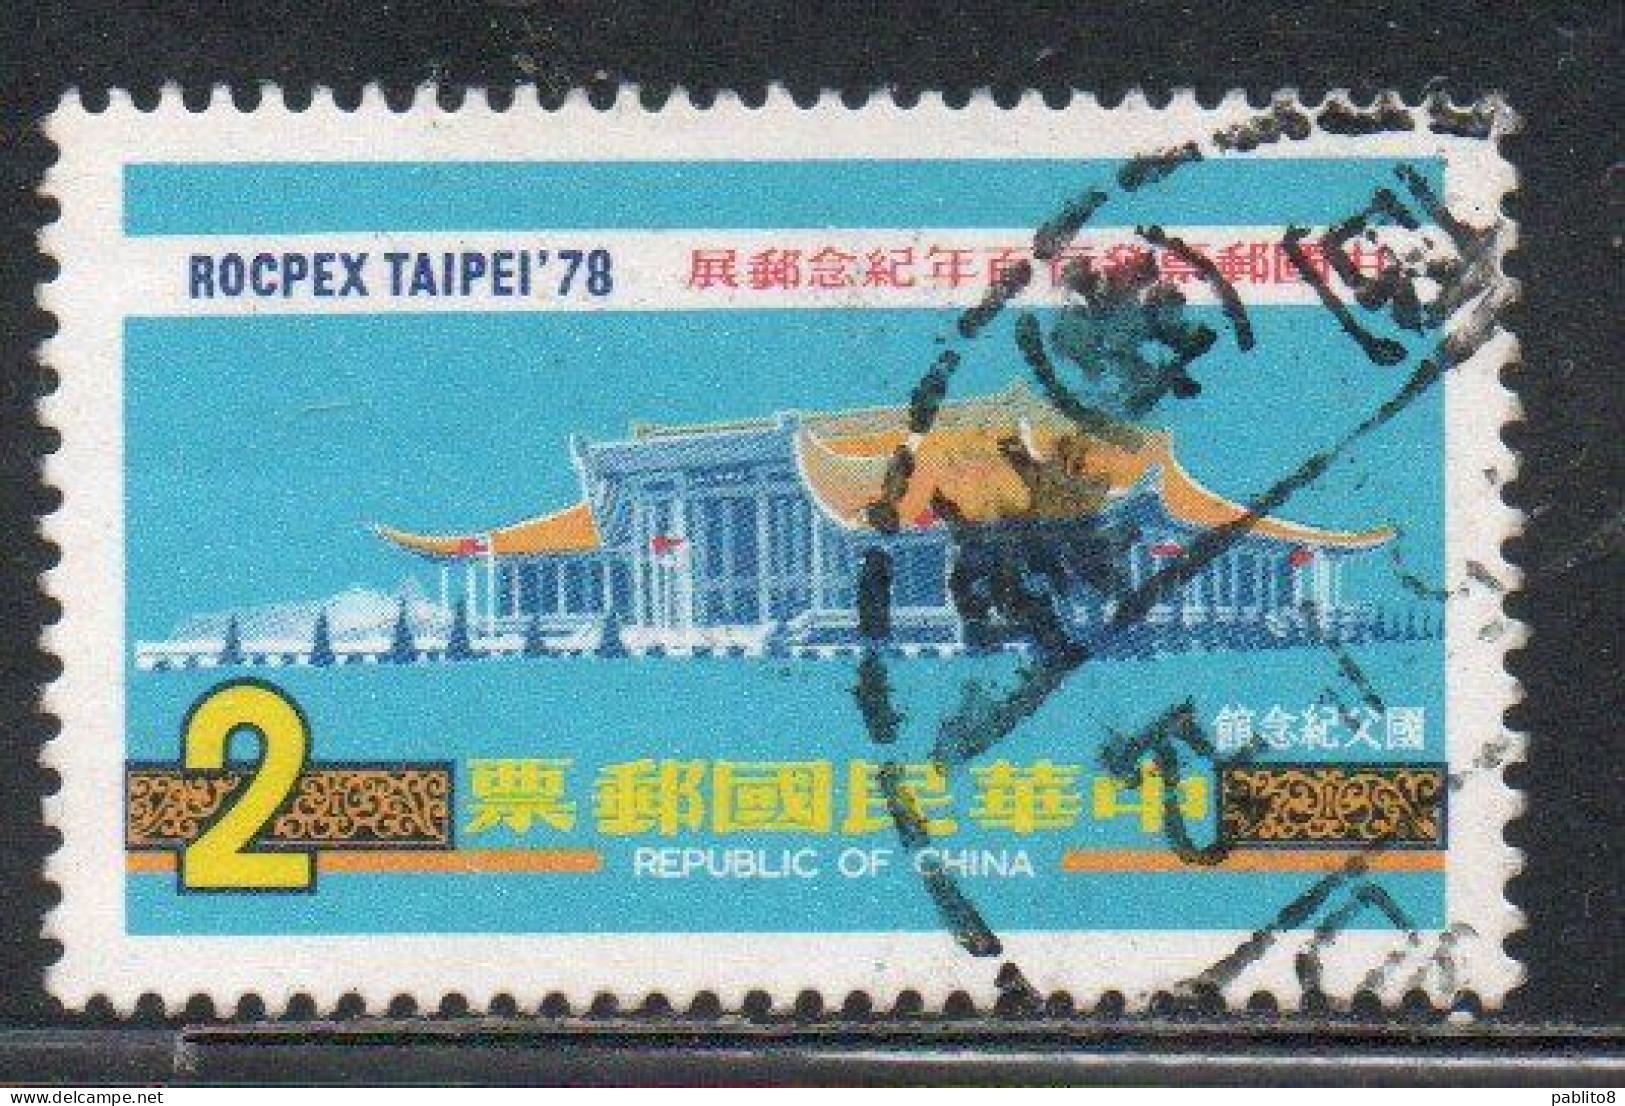 CHINA REPUBLIC CINA TAIWAN FORMOSA 1978 ROCPEX78 PHILATELIC EXHIBITION SUN YAT-SEN MEMORIAL HALL 2$ USED USATO OBLITERE' - Usados